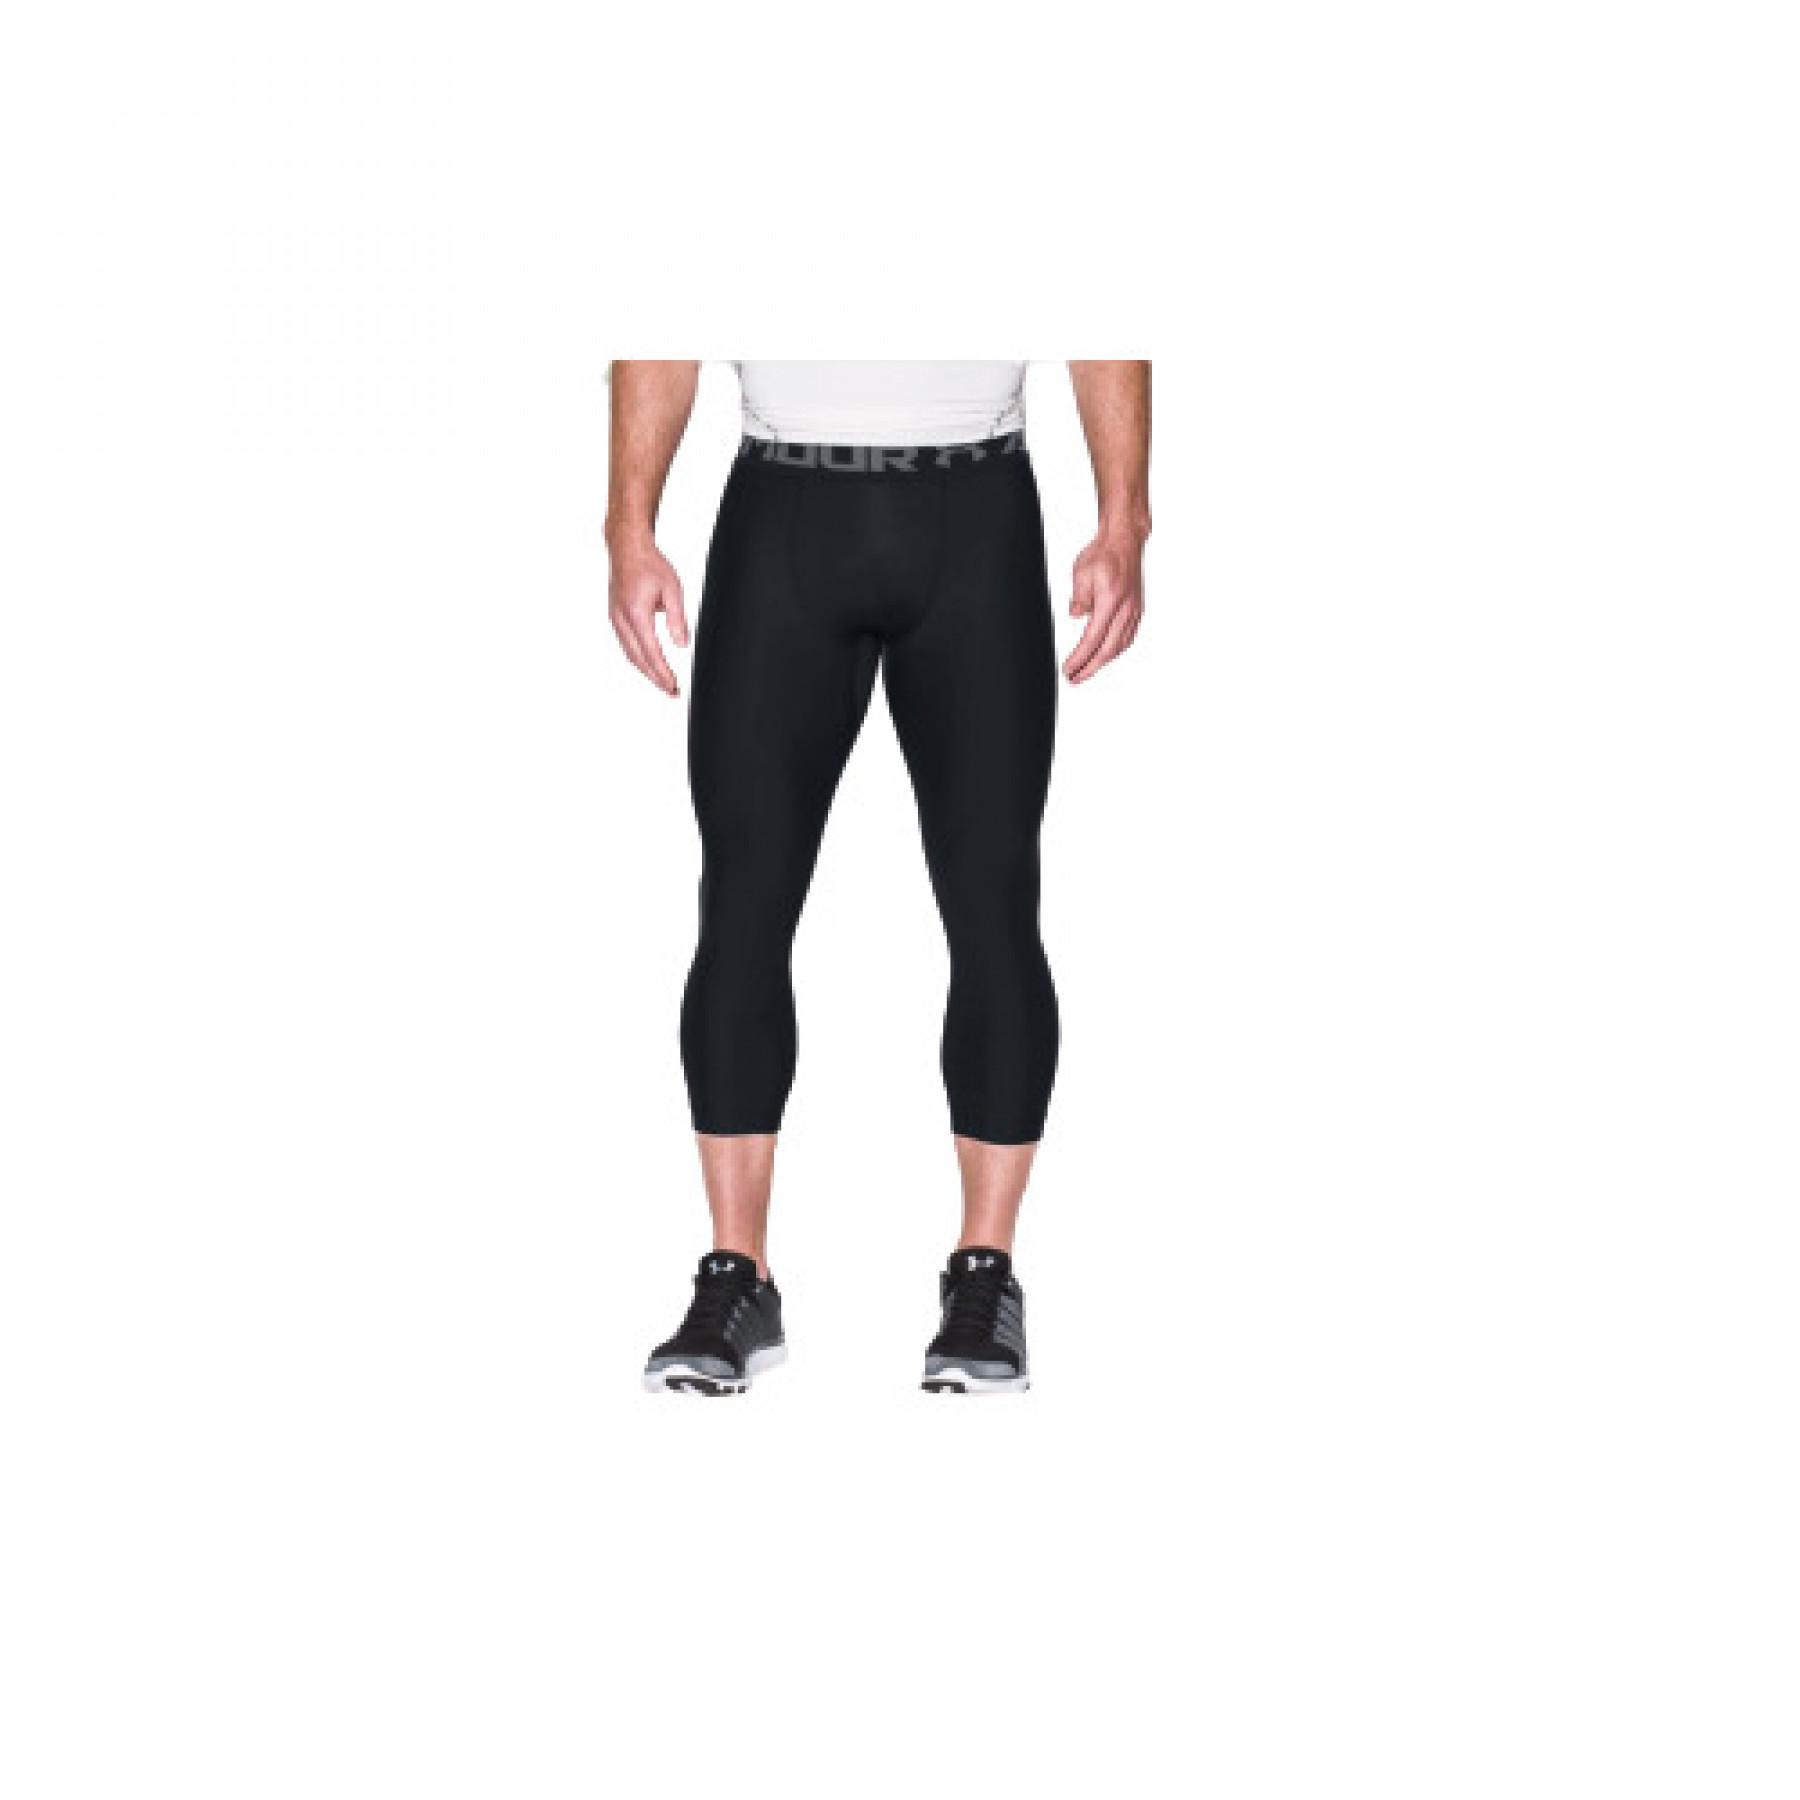 3/4 compression leggings Under Armour HeatGear®